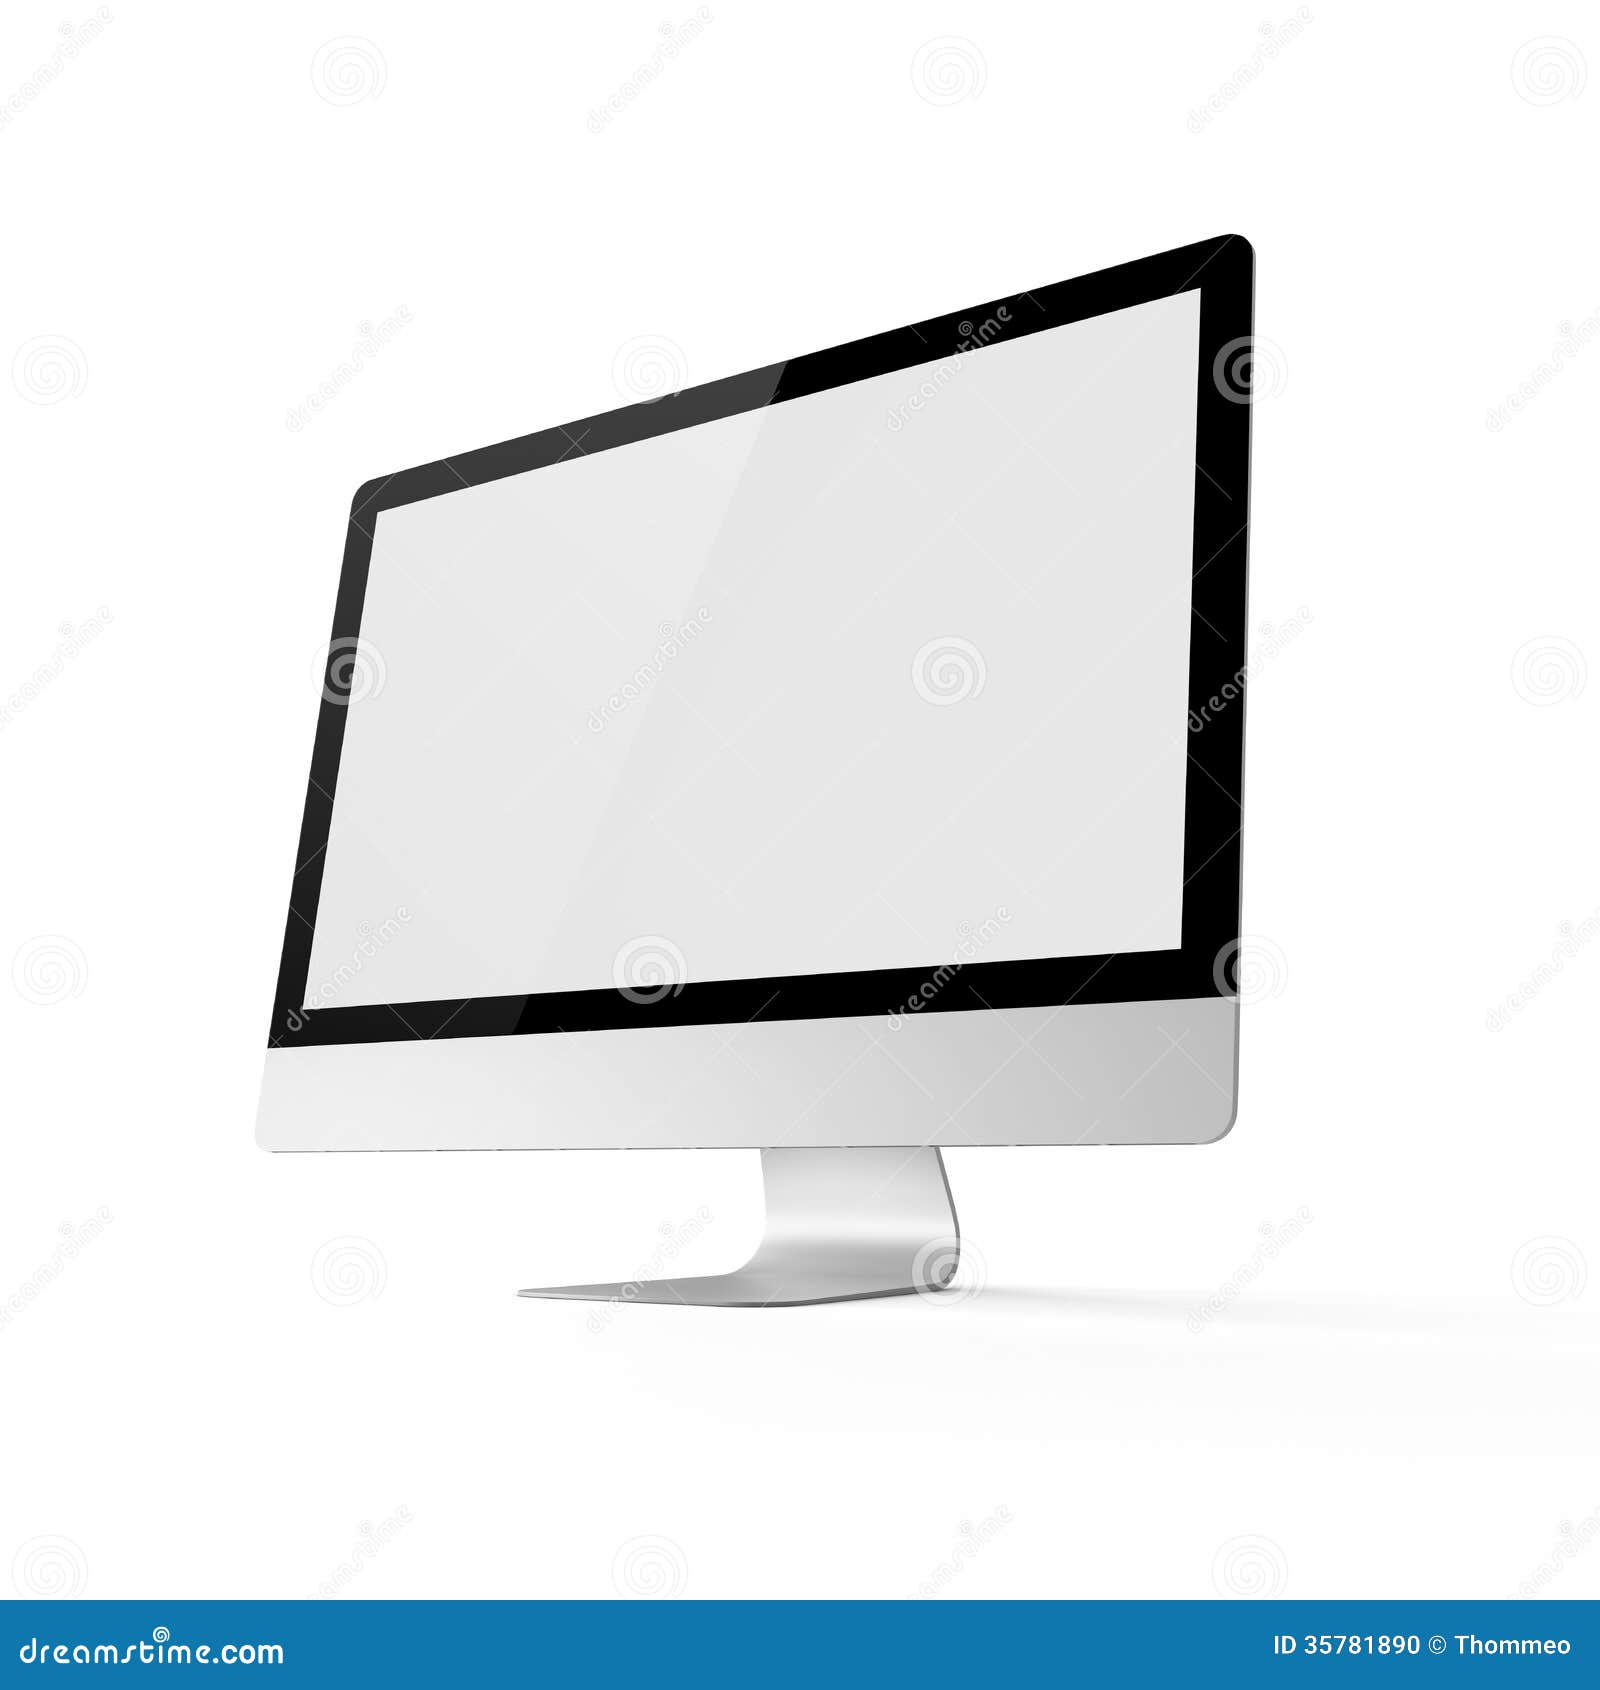 mac computer screen